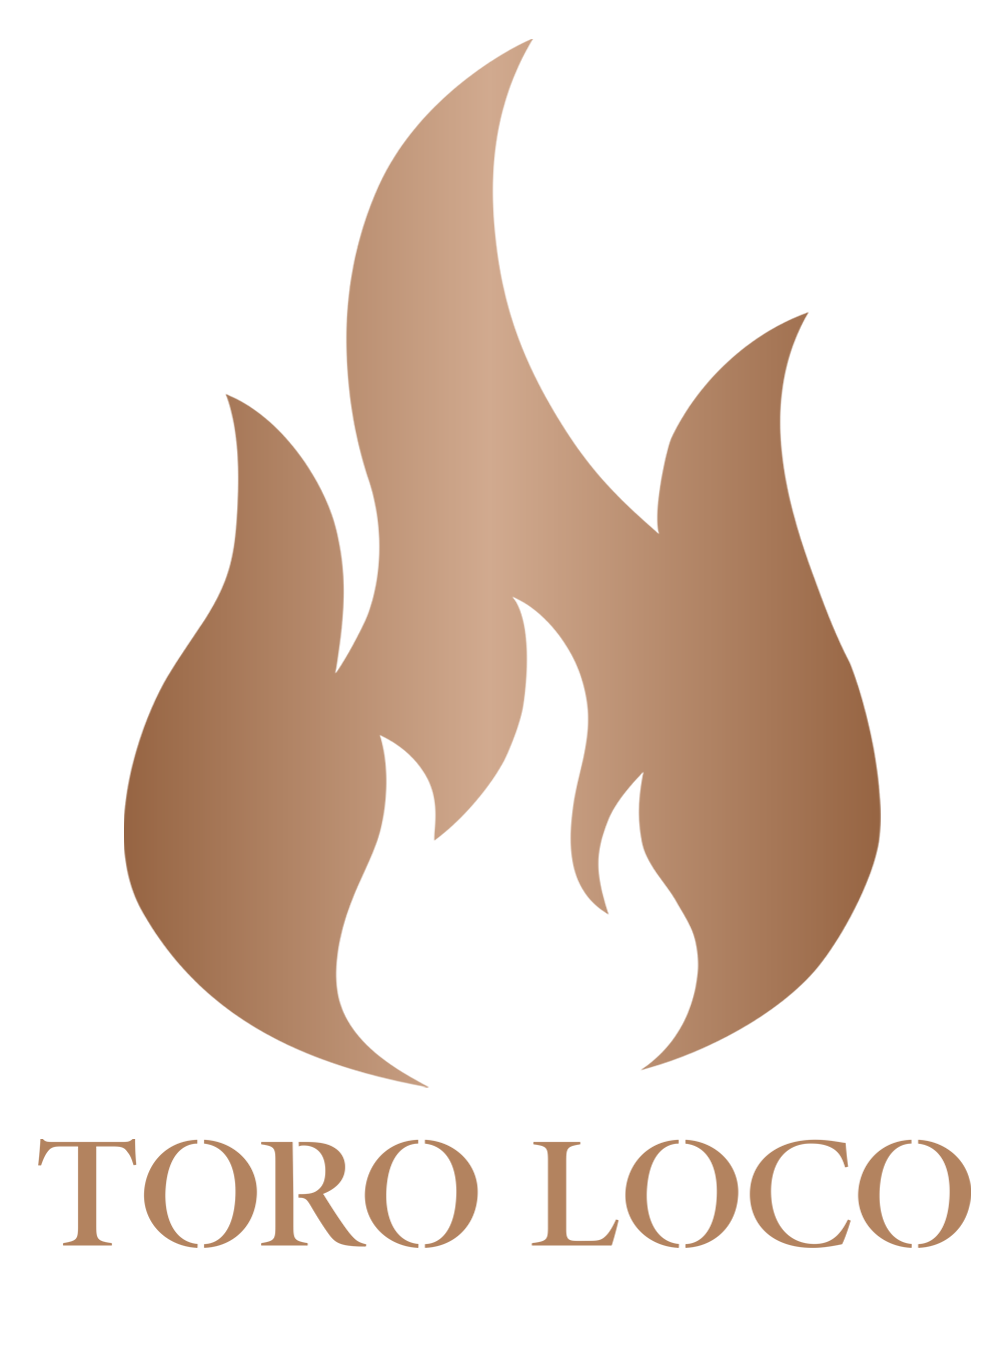 Toro Loco Restaurant